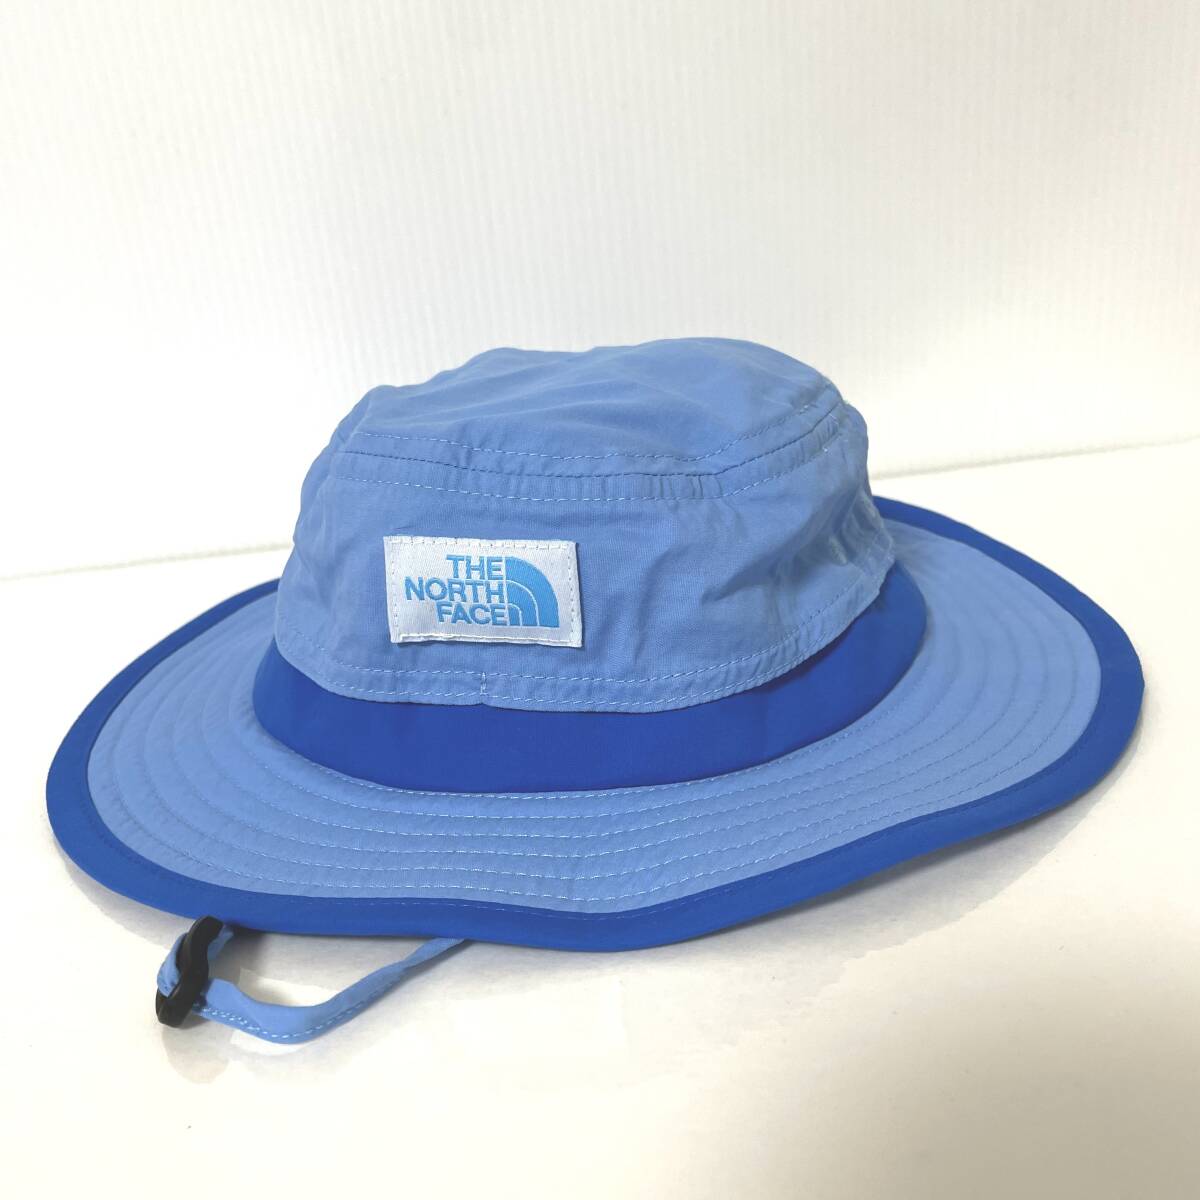  The North Face THE NORTH FACE ho laizn hat safari hat hat light blue Kids S size KS(47-49cm) NNJ01604